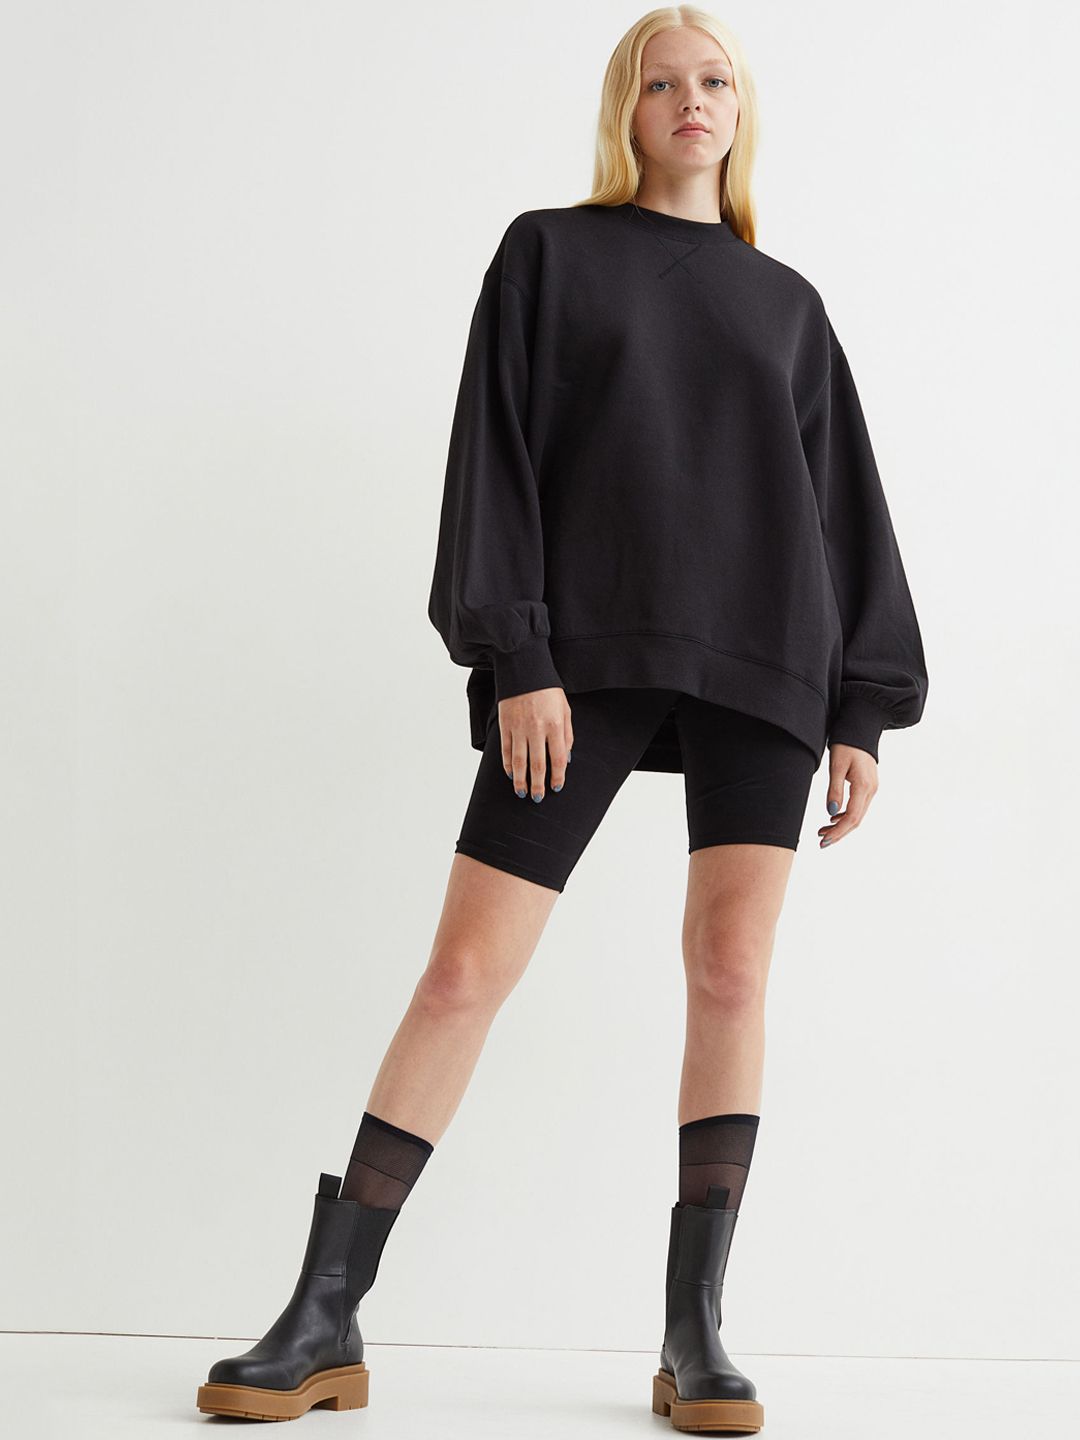 H&M Women Black Solid Sweatshirt Price in India